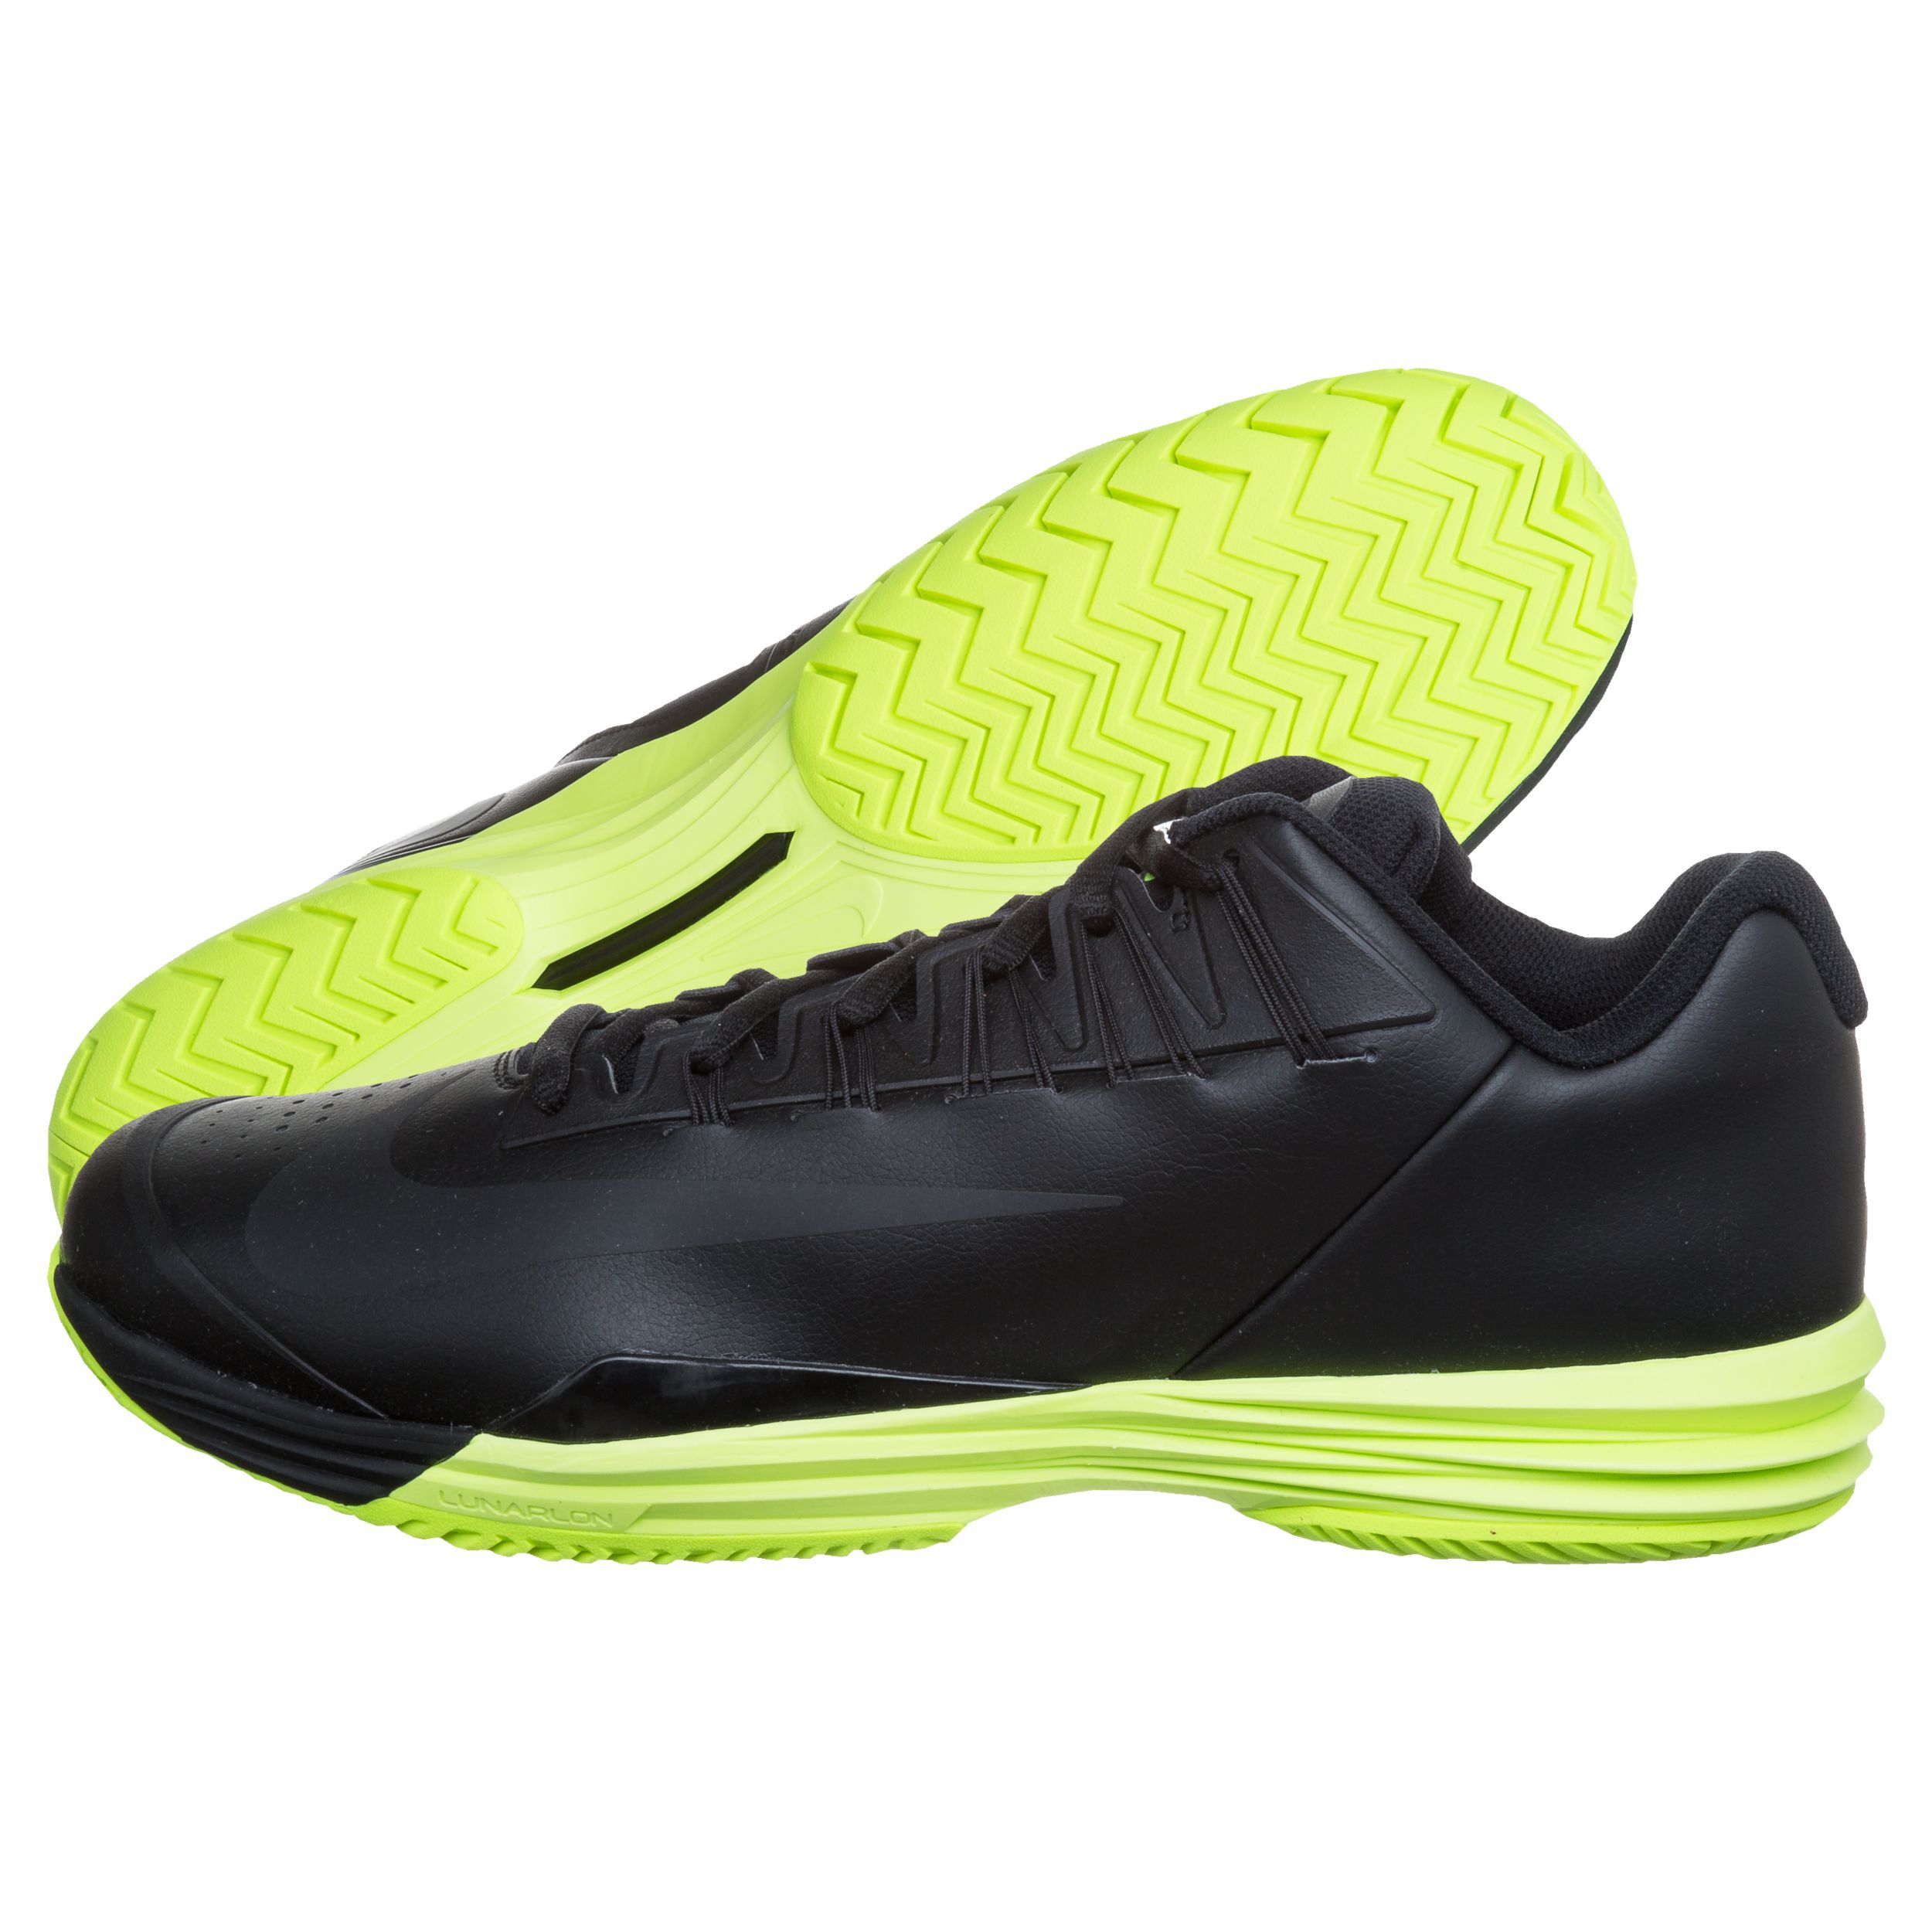 Rafael Nadal Lunar Ballistec 1.5 All Court Shoe Men - Black, Neon Yellow